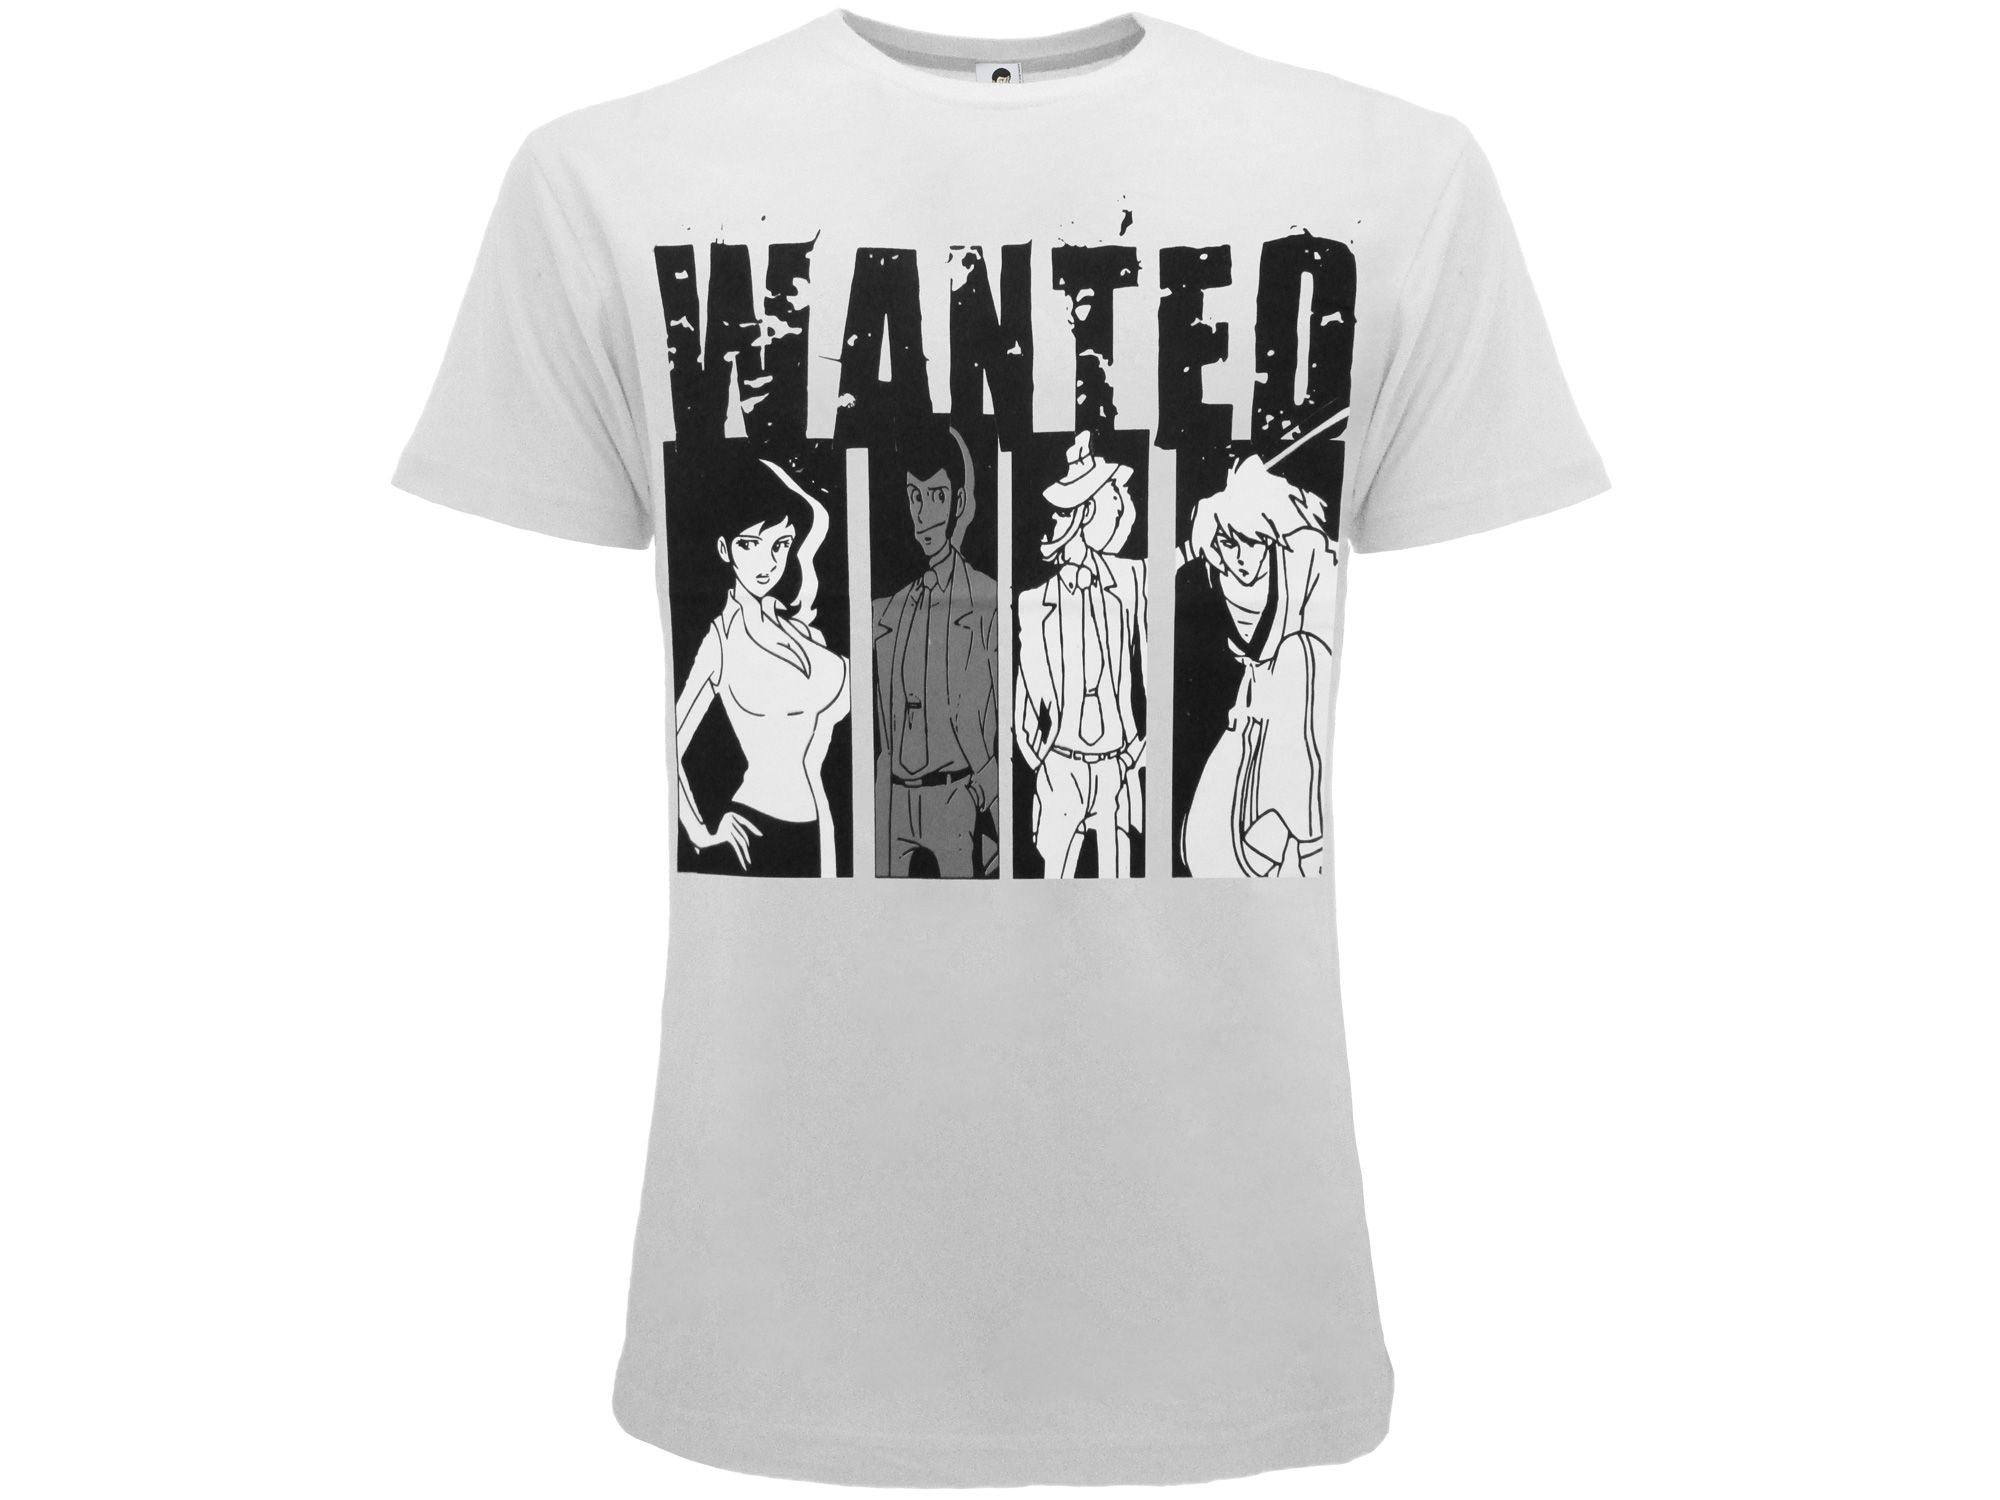 LUPIN III - T-shirt Wanted Margot, Lupin, Jigen & Goemon M bianca - Disponibile in 2/3 giorni lavorativi